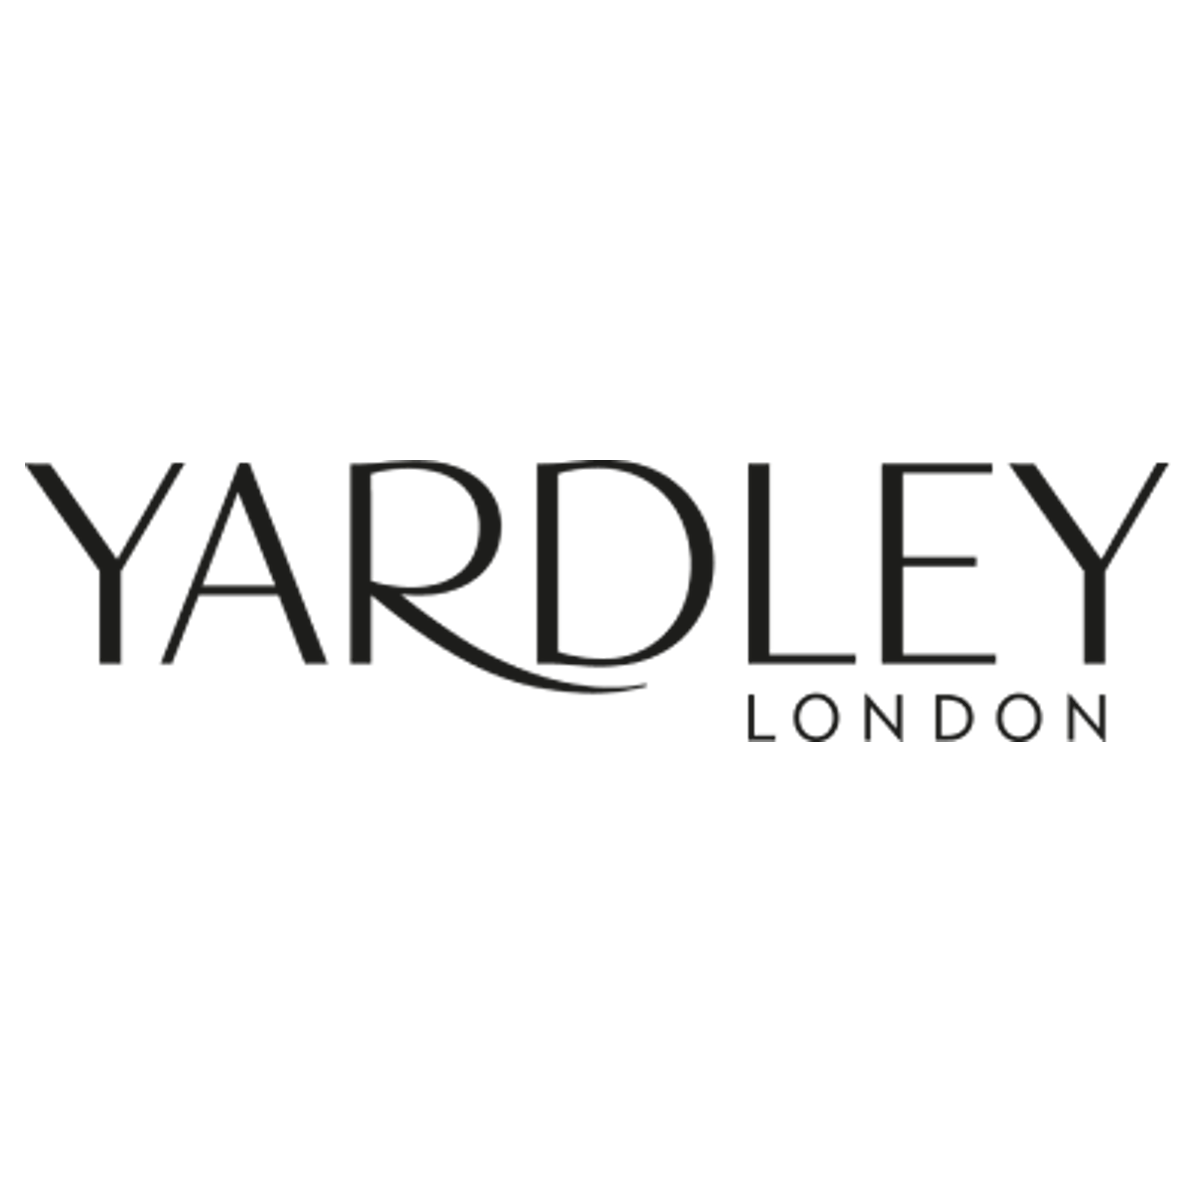 (c) Yardleylondon.co.uk